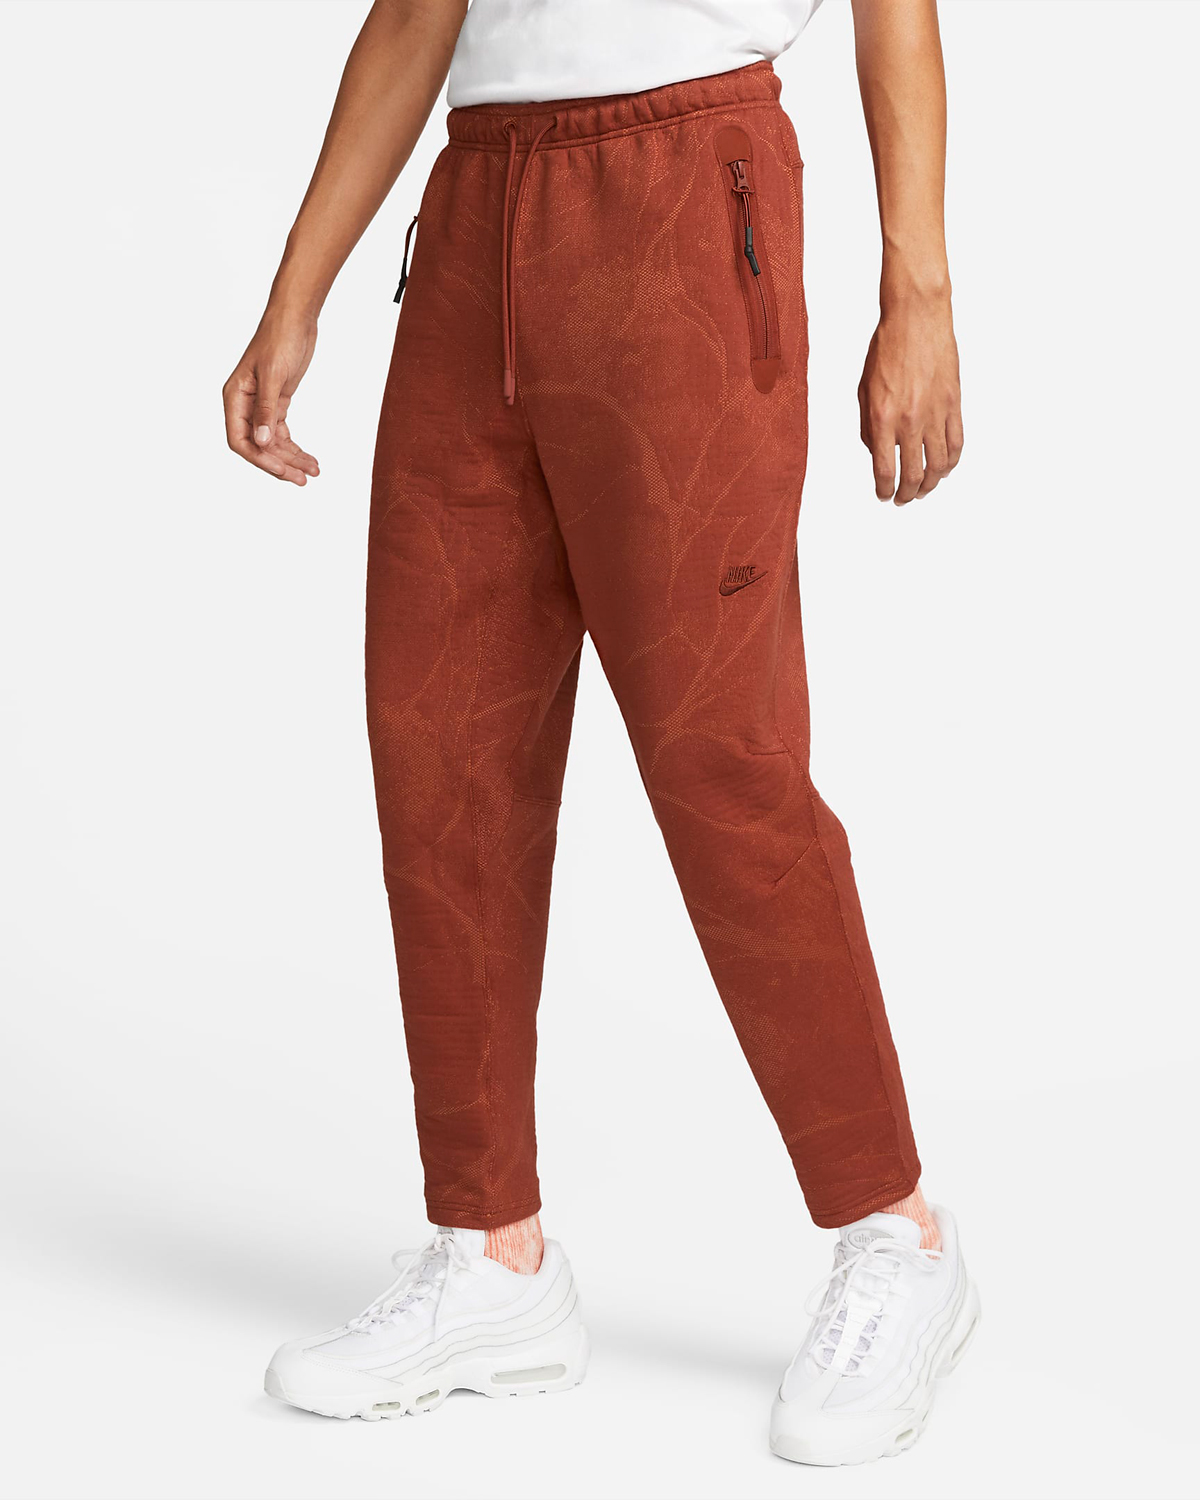 Nike-Mars-Stone-Tech-Fleece-Floral-Pants-1